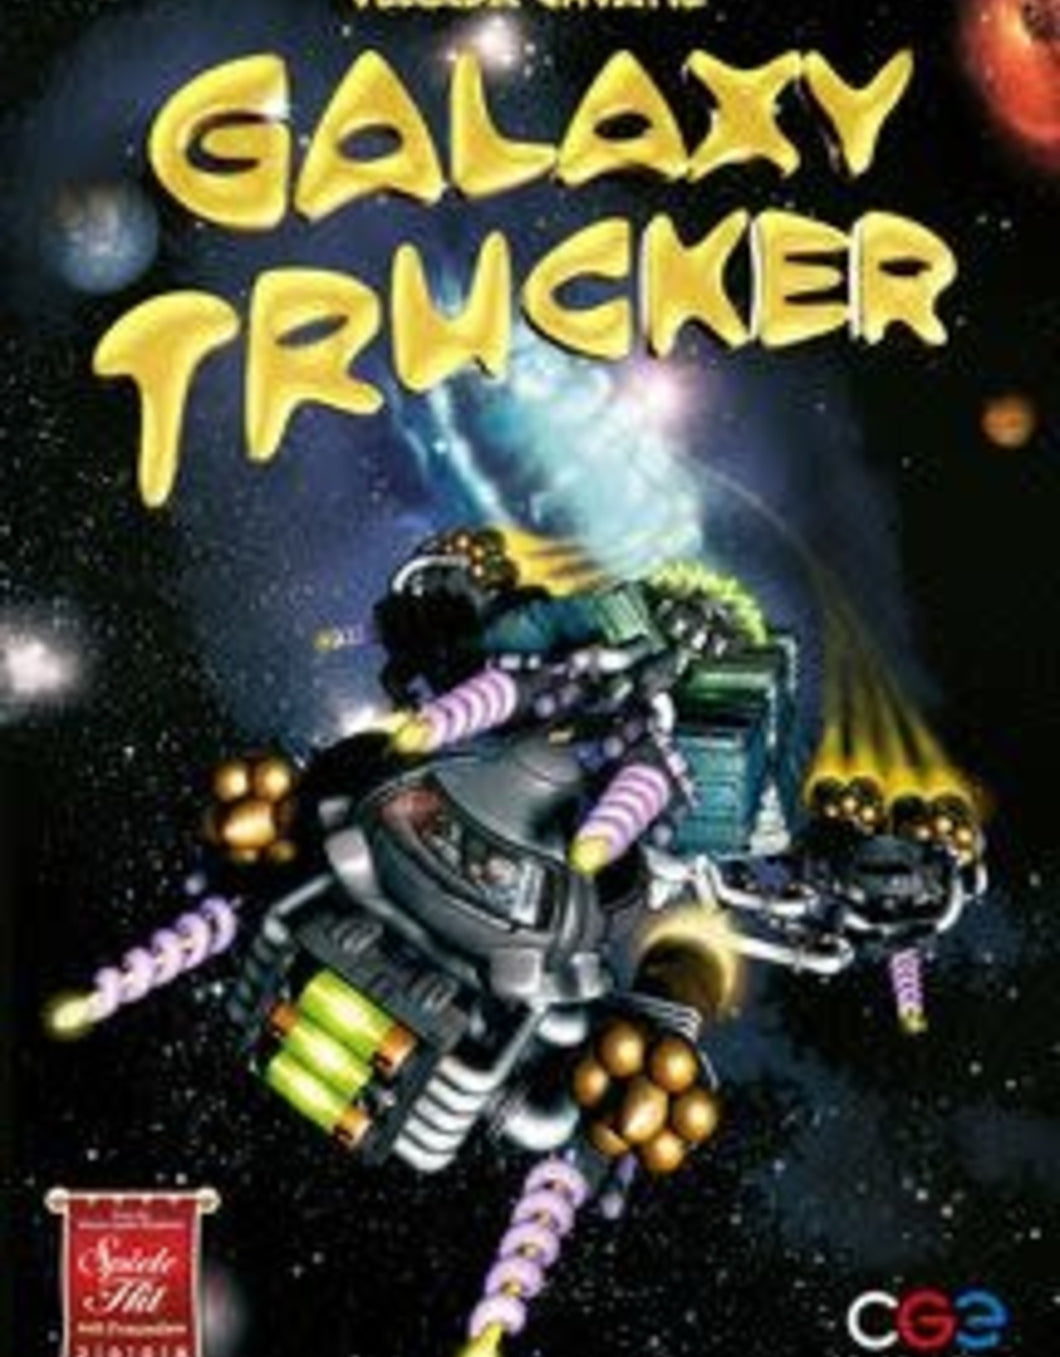 Galaxy trucker